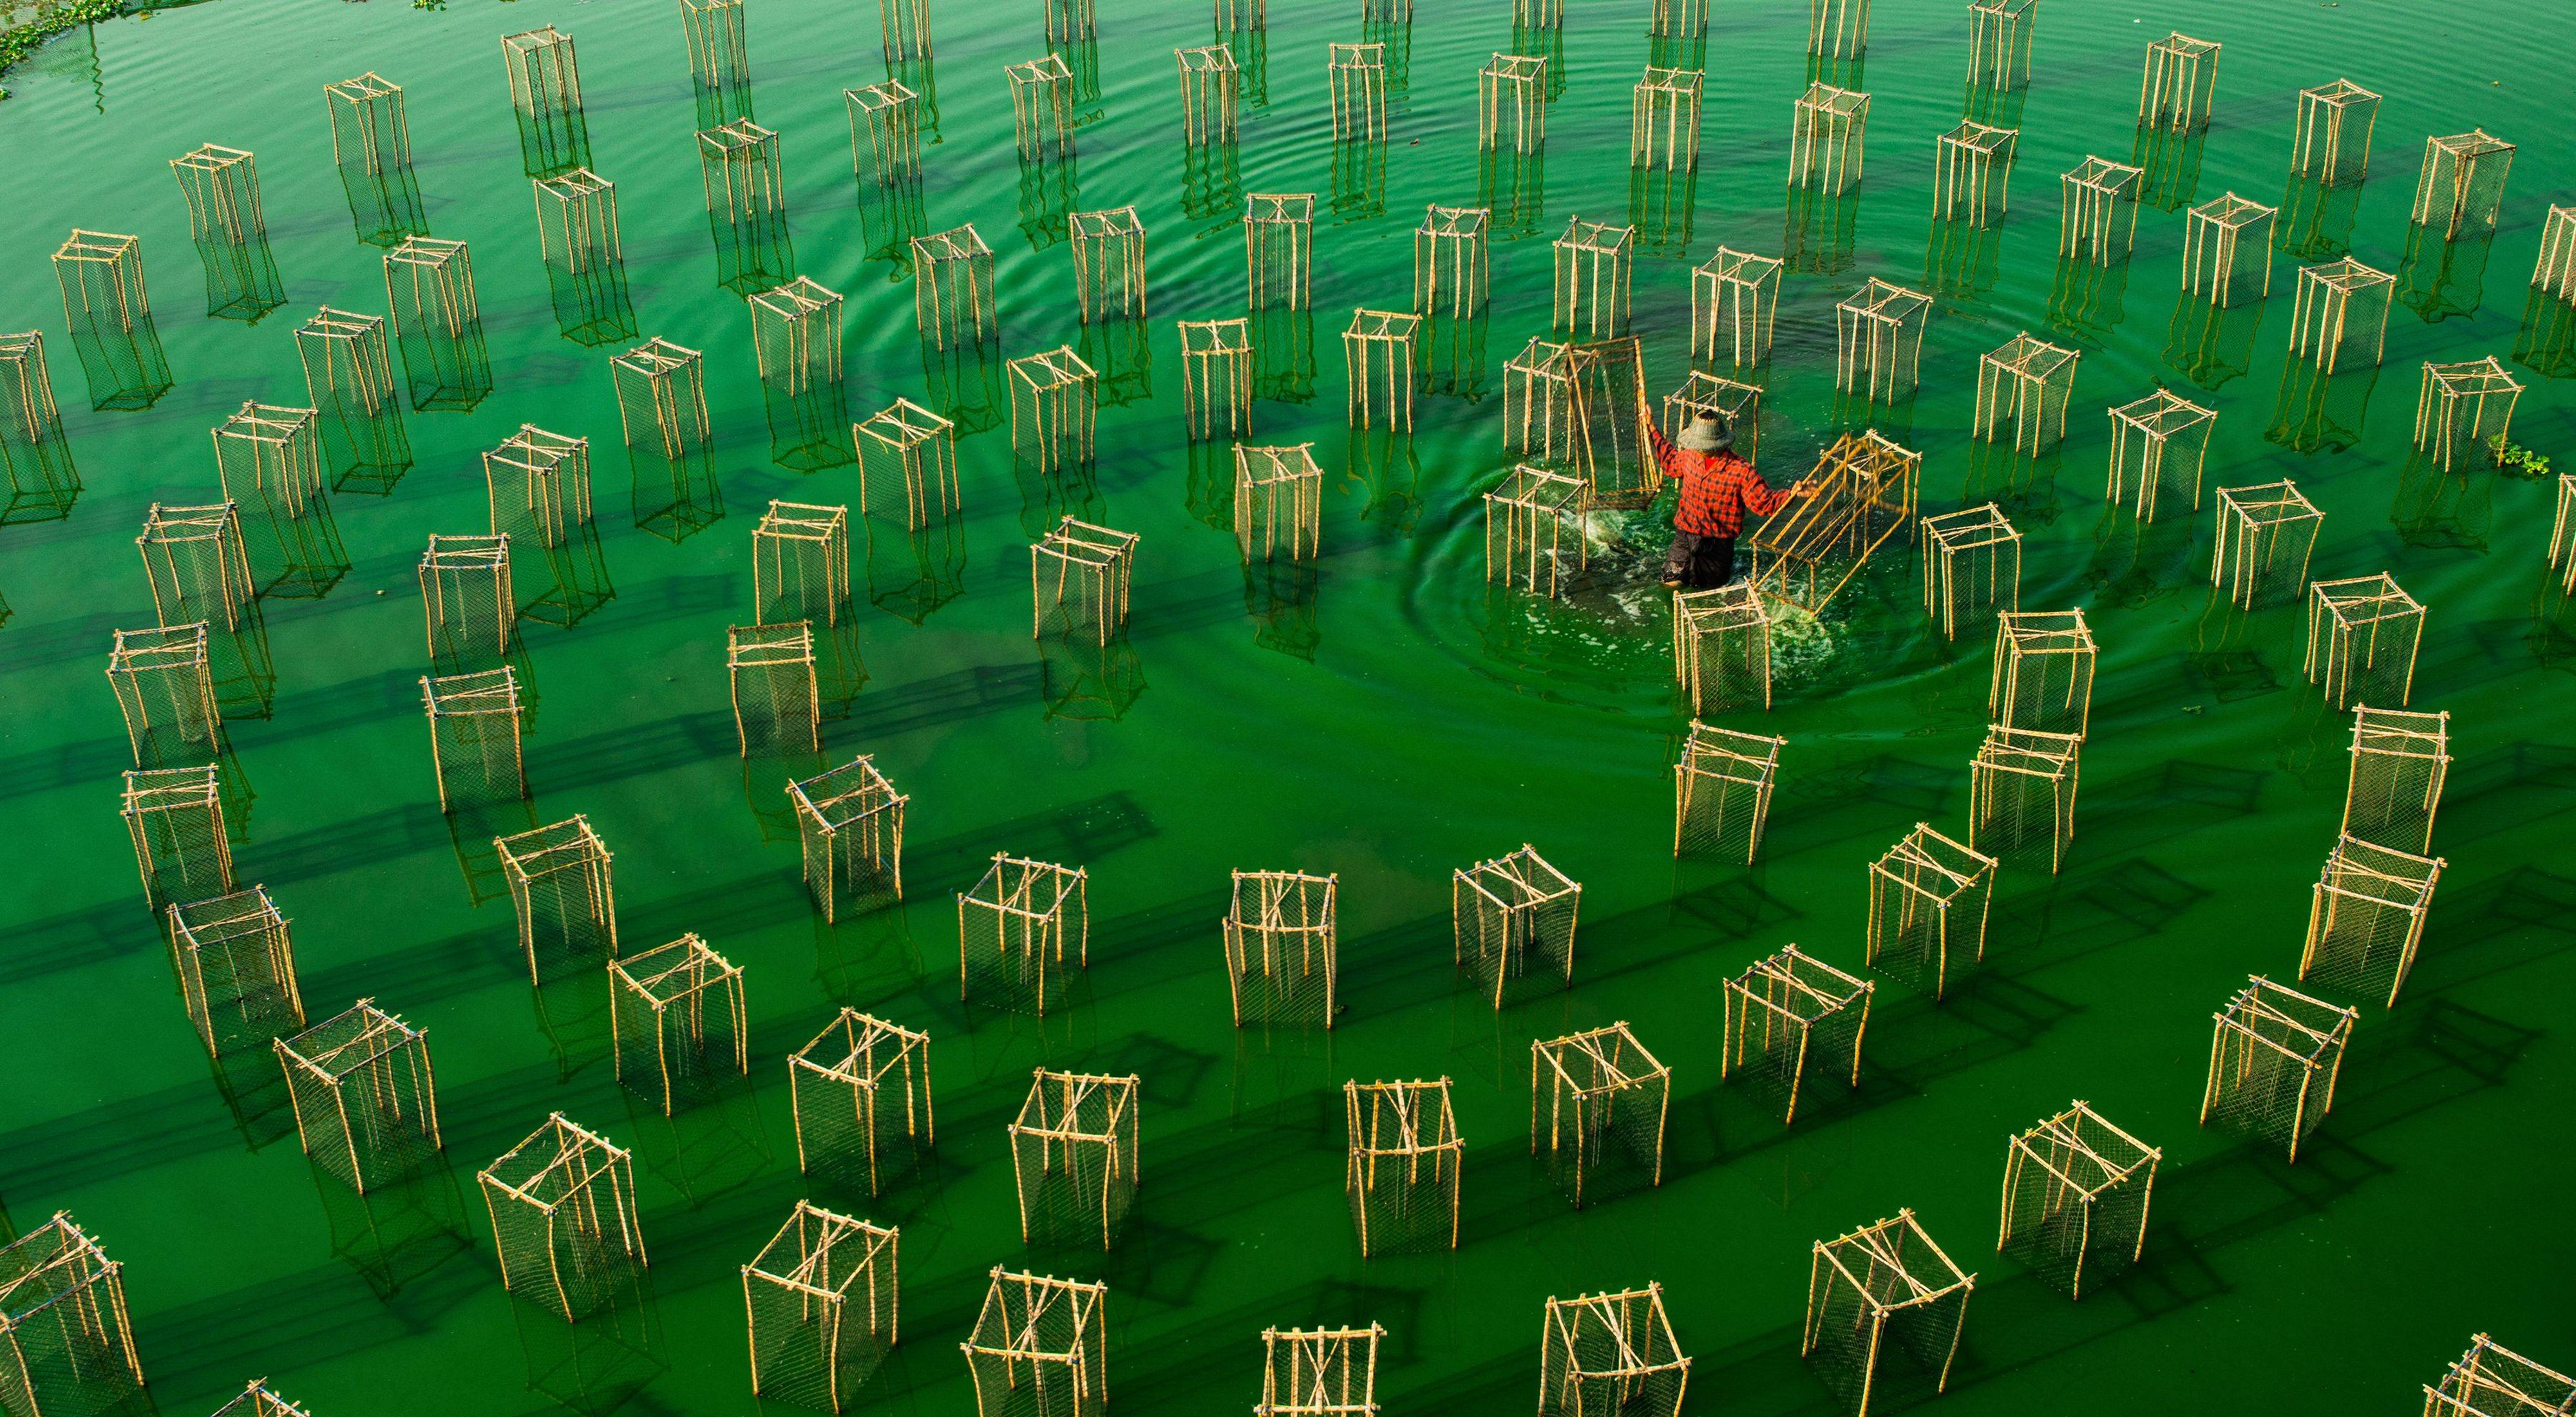 A fisherman tending to his fishing nets